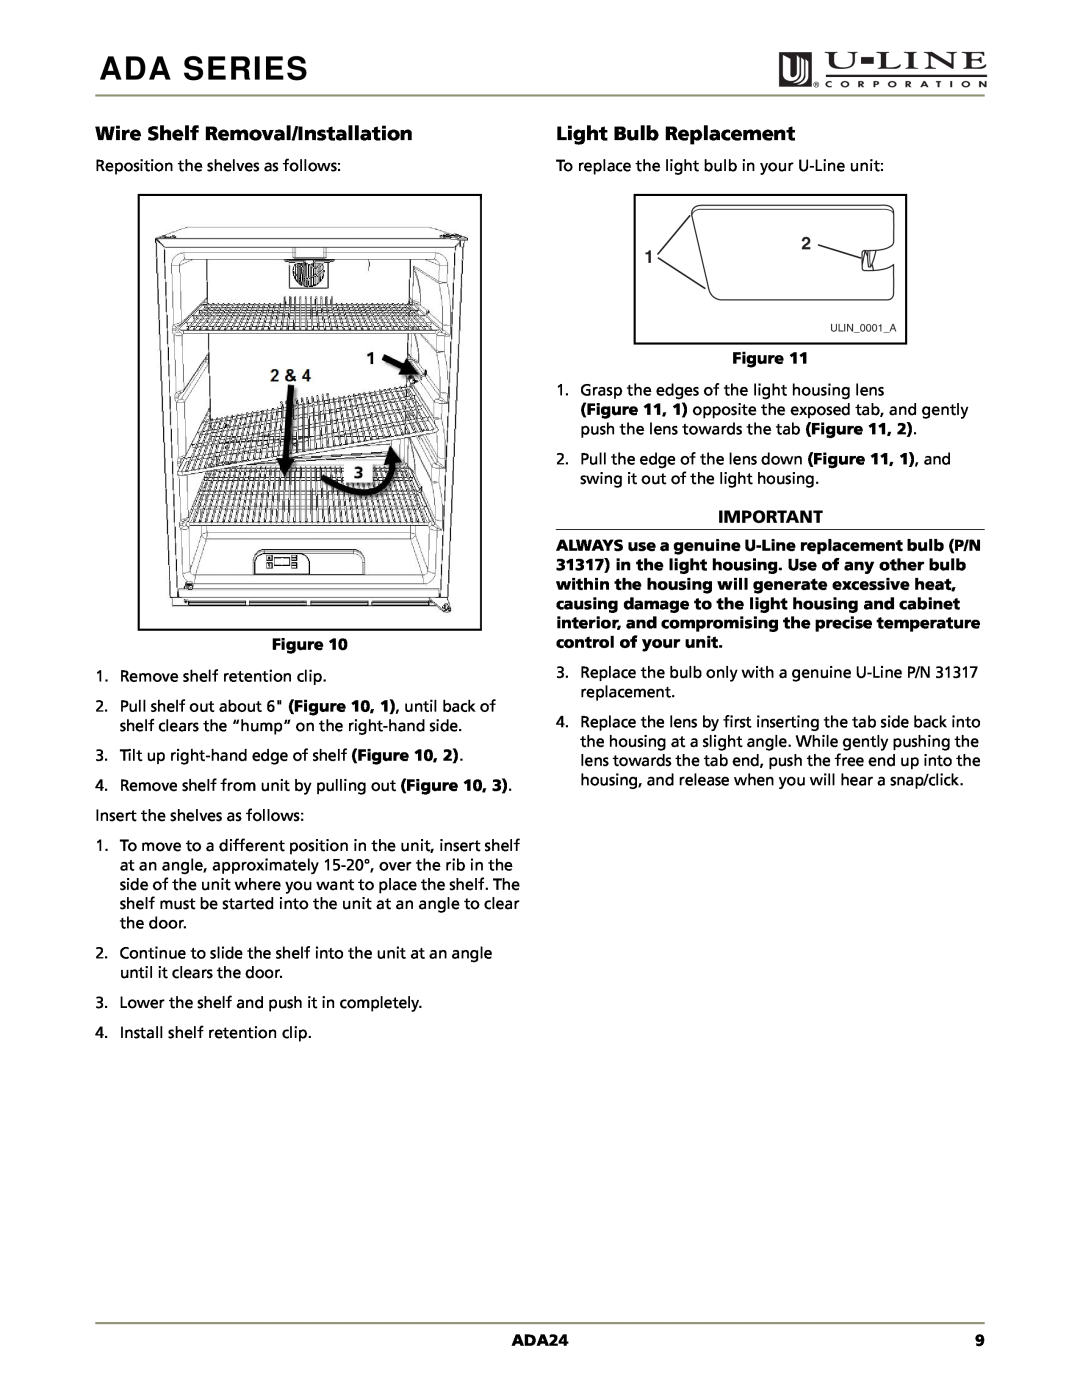 U-Line ADA24RGL manual Wire Shelf Removal/Installation, Light Bulb Replacement, Ada Series 